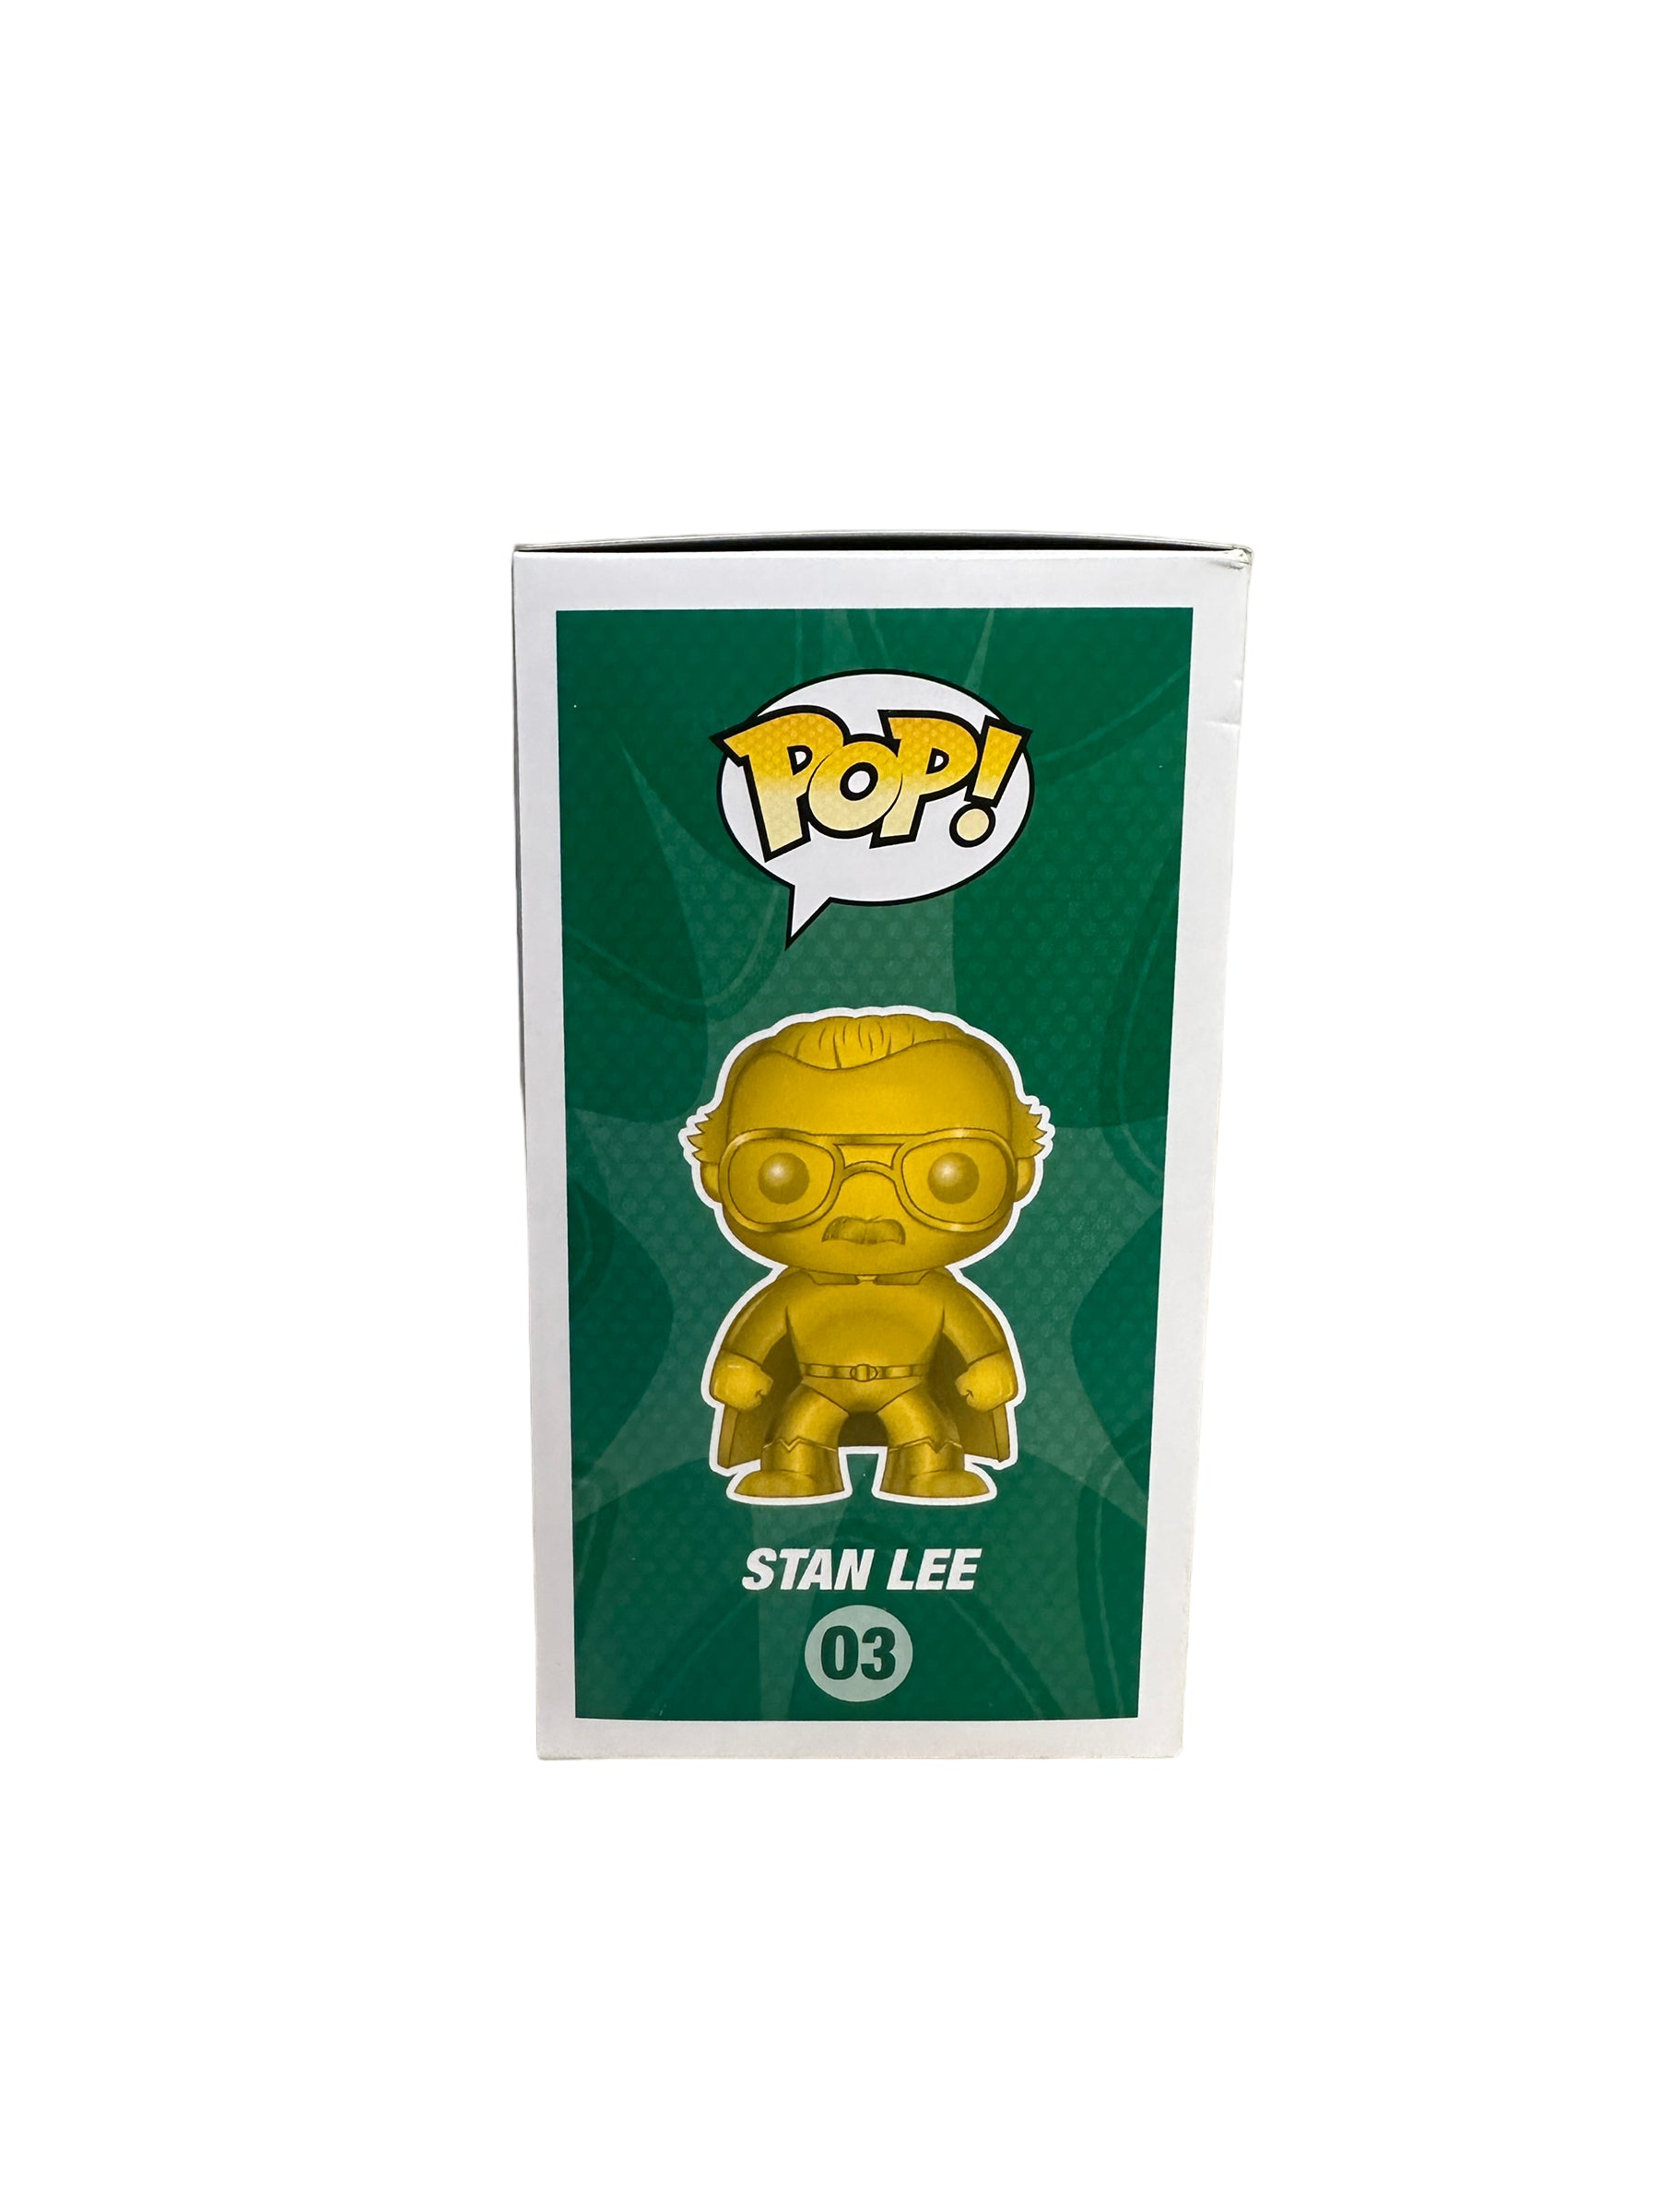 Stan Lee #03 (Superhero Gold) Funko Pop! - Stanleecollectibles.com Exclusive - Condition 7.5/10